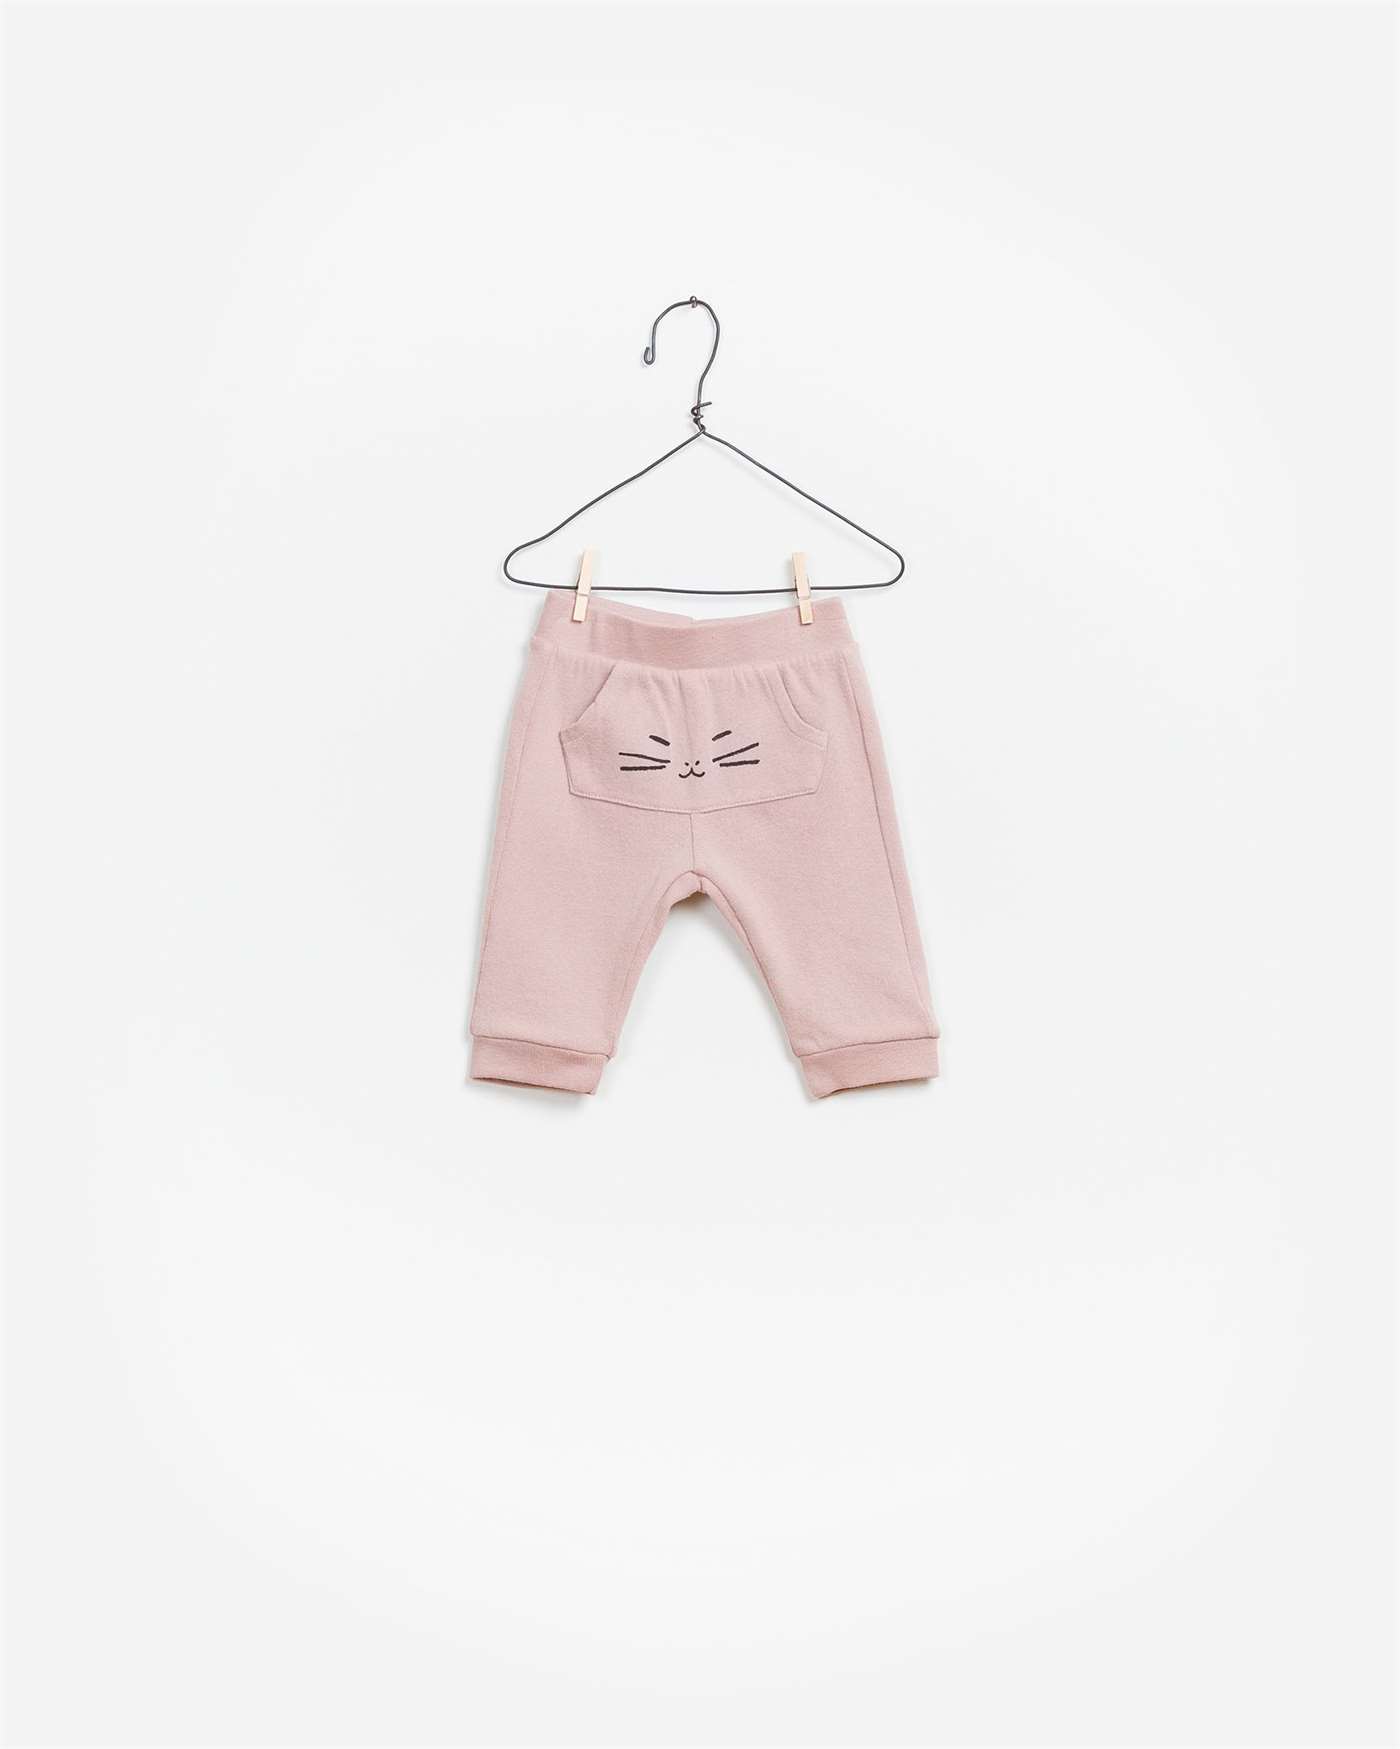 BeeBoo|BeeBoo PlayUp vêtements bébé baby cloth Pantalon pants Felpa coton bio organic cotton rose pink